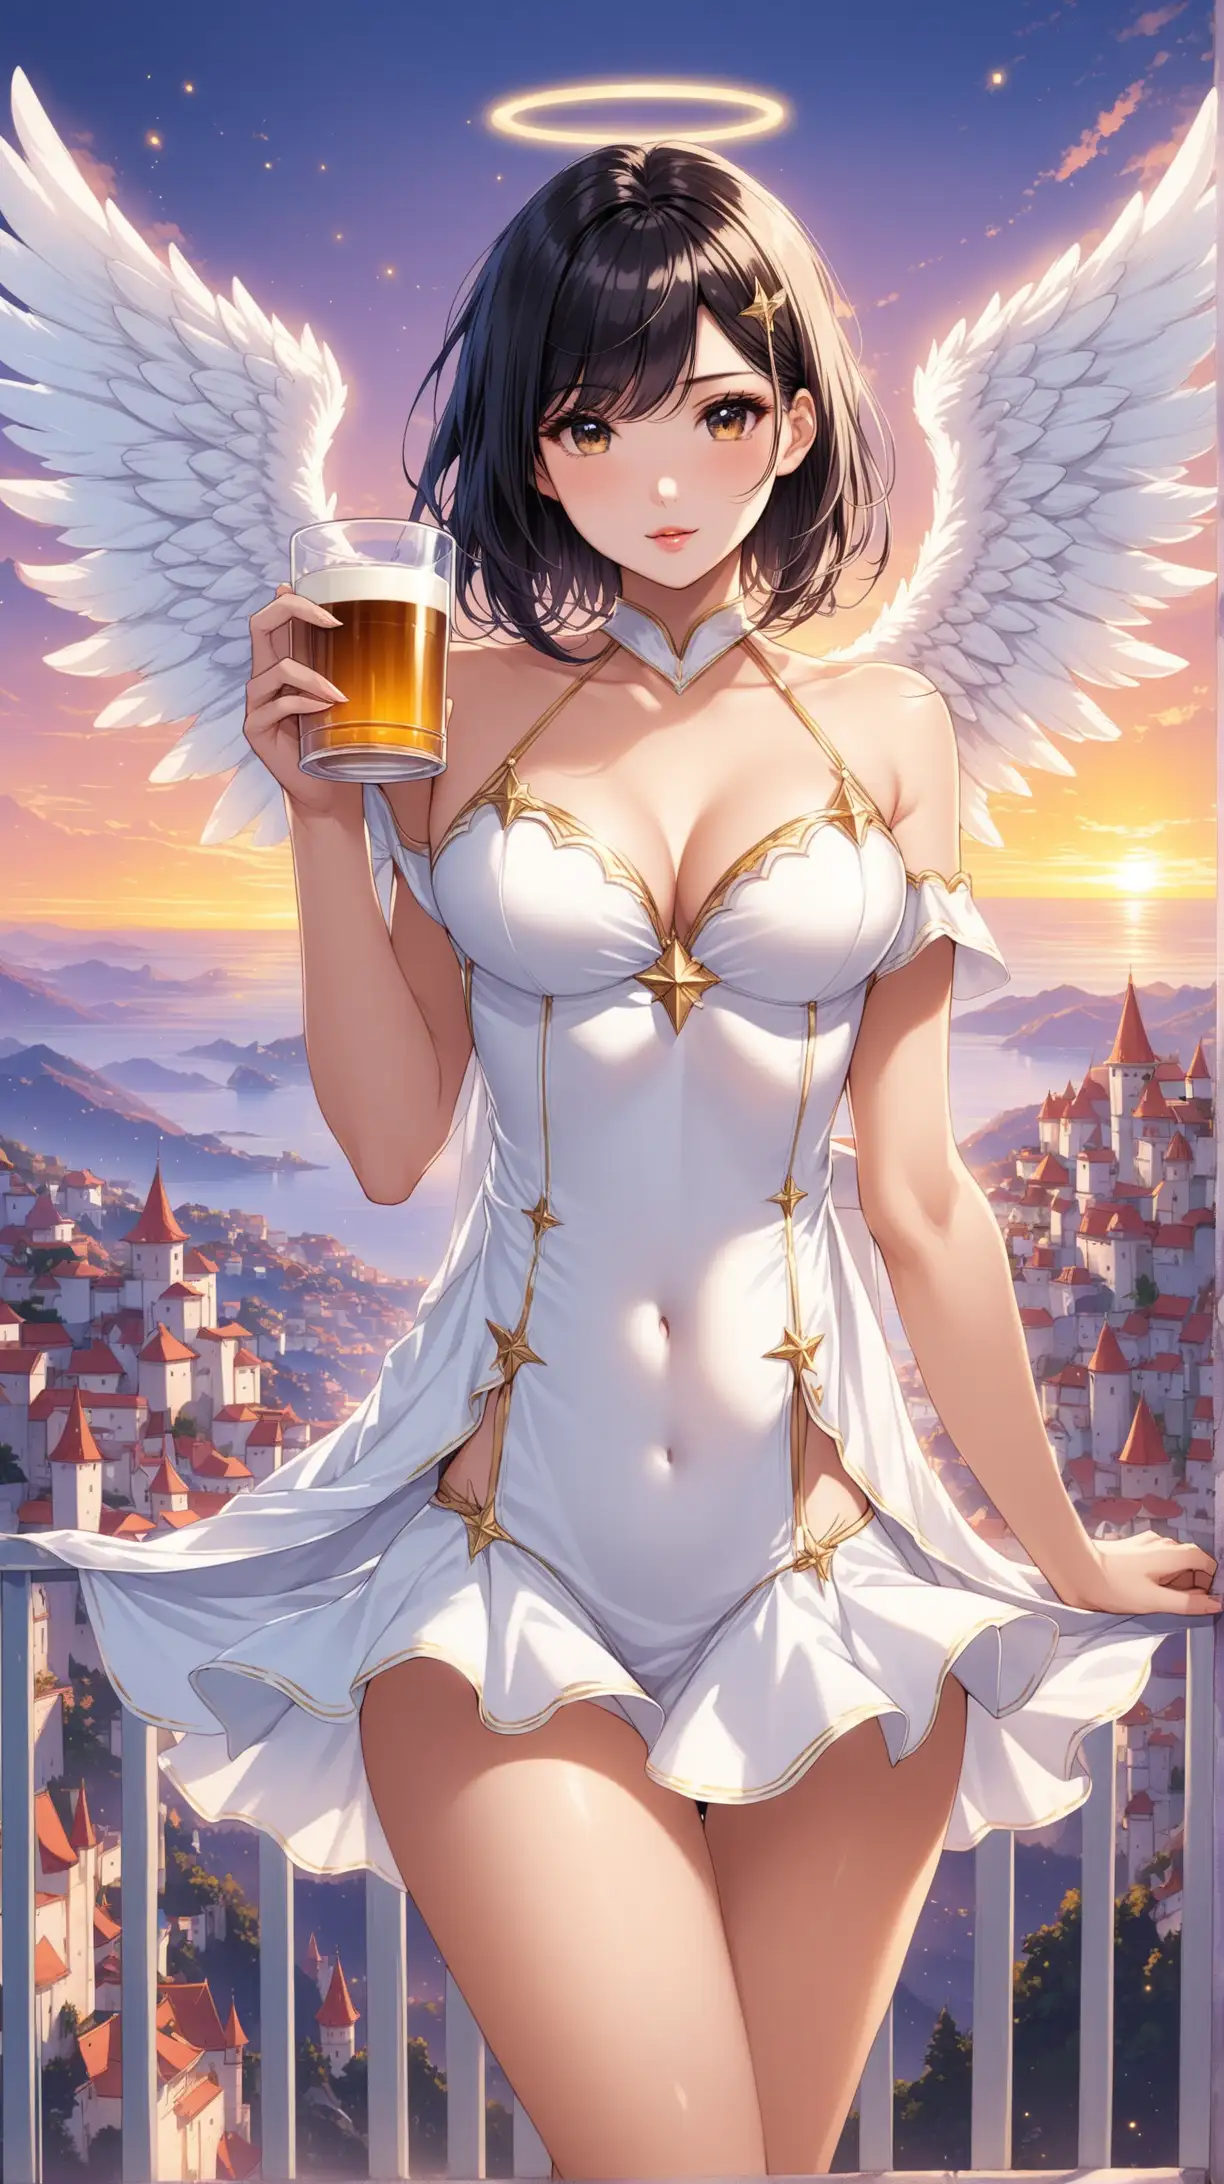 Sexy women carry cup , angel costume, black medium hair, white short dress, fantastic background 